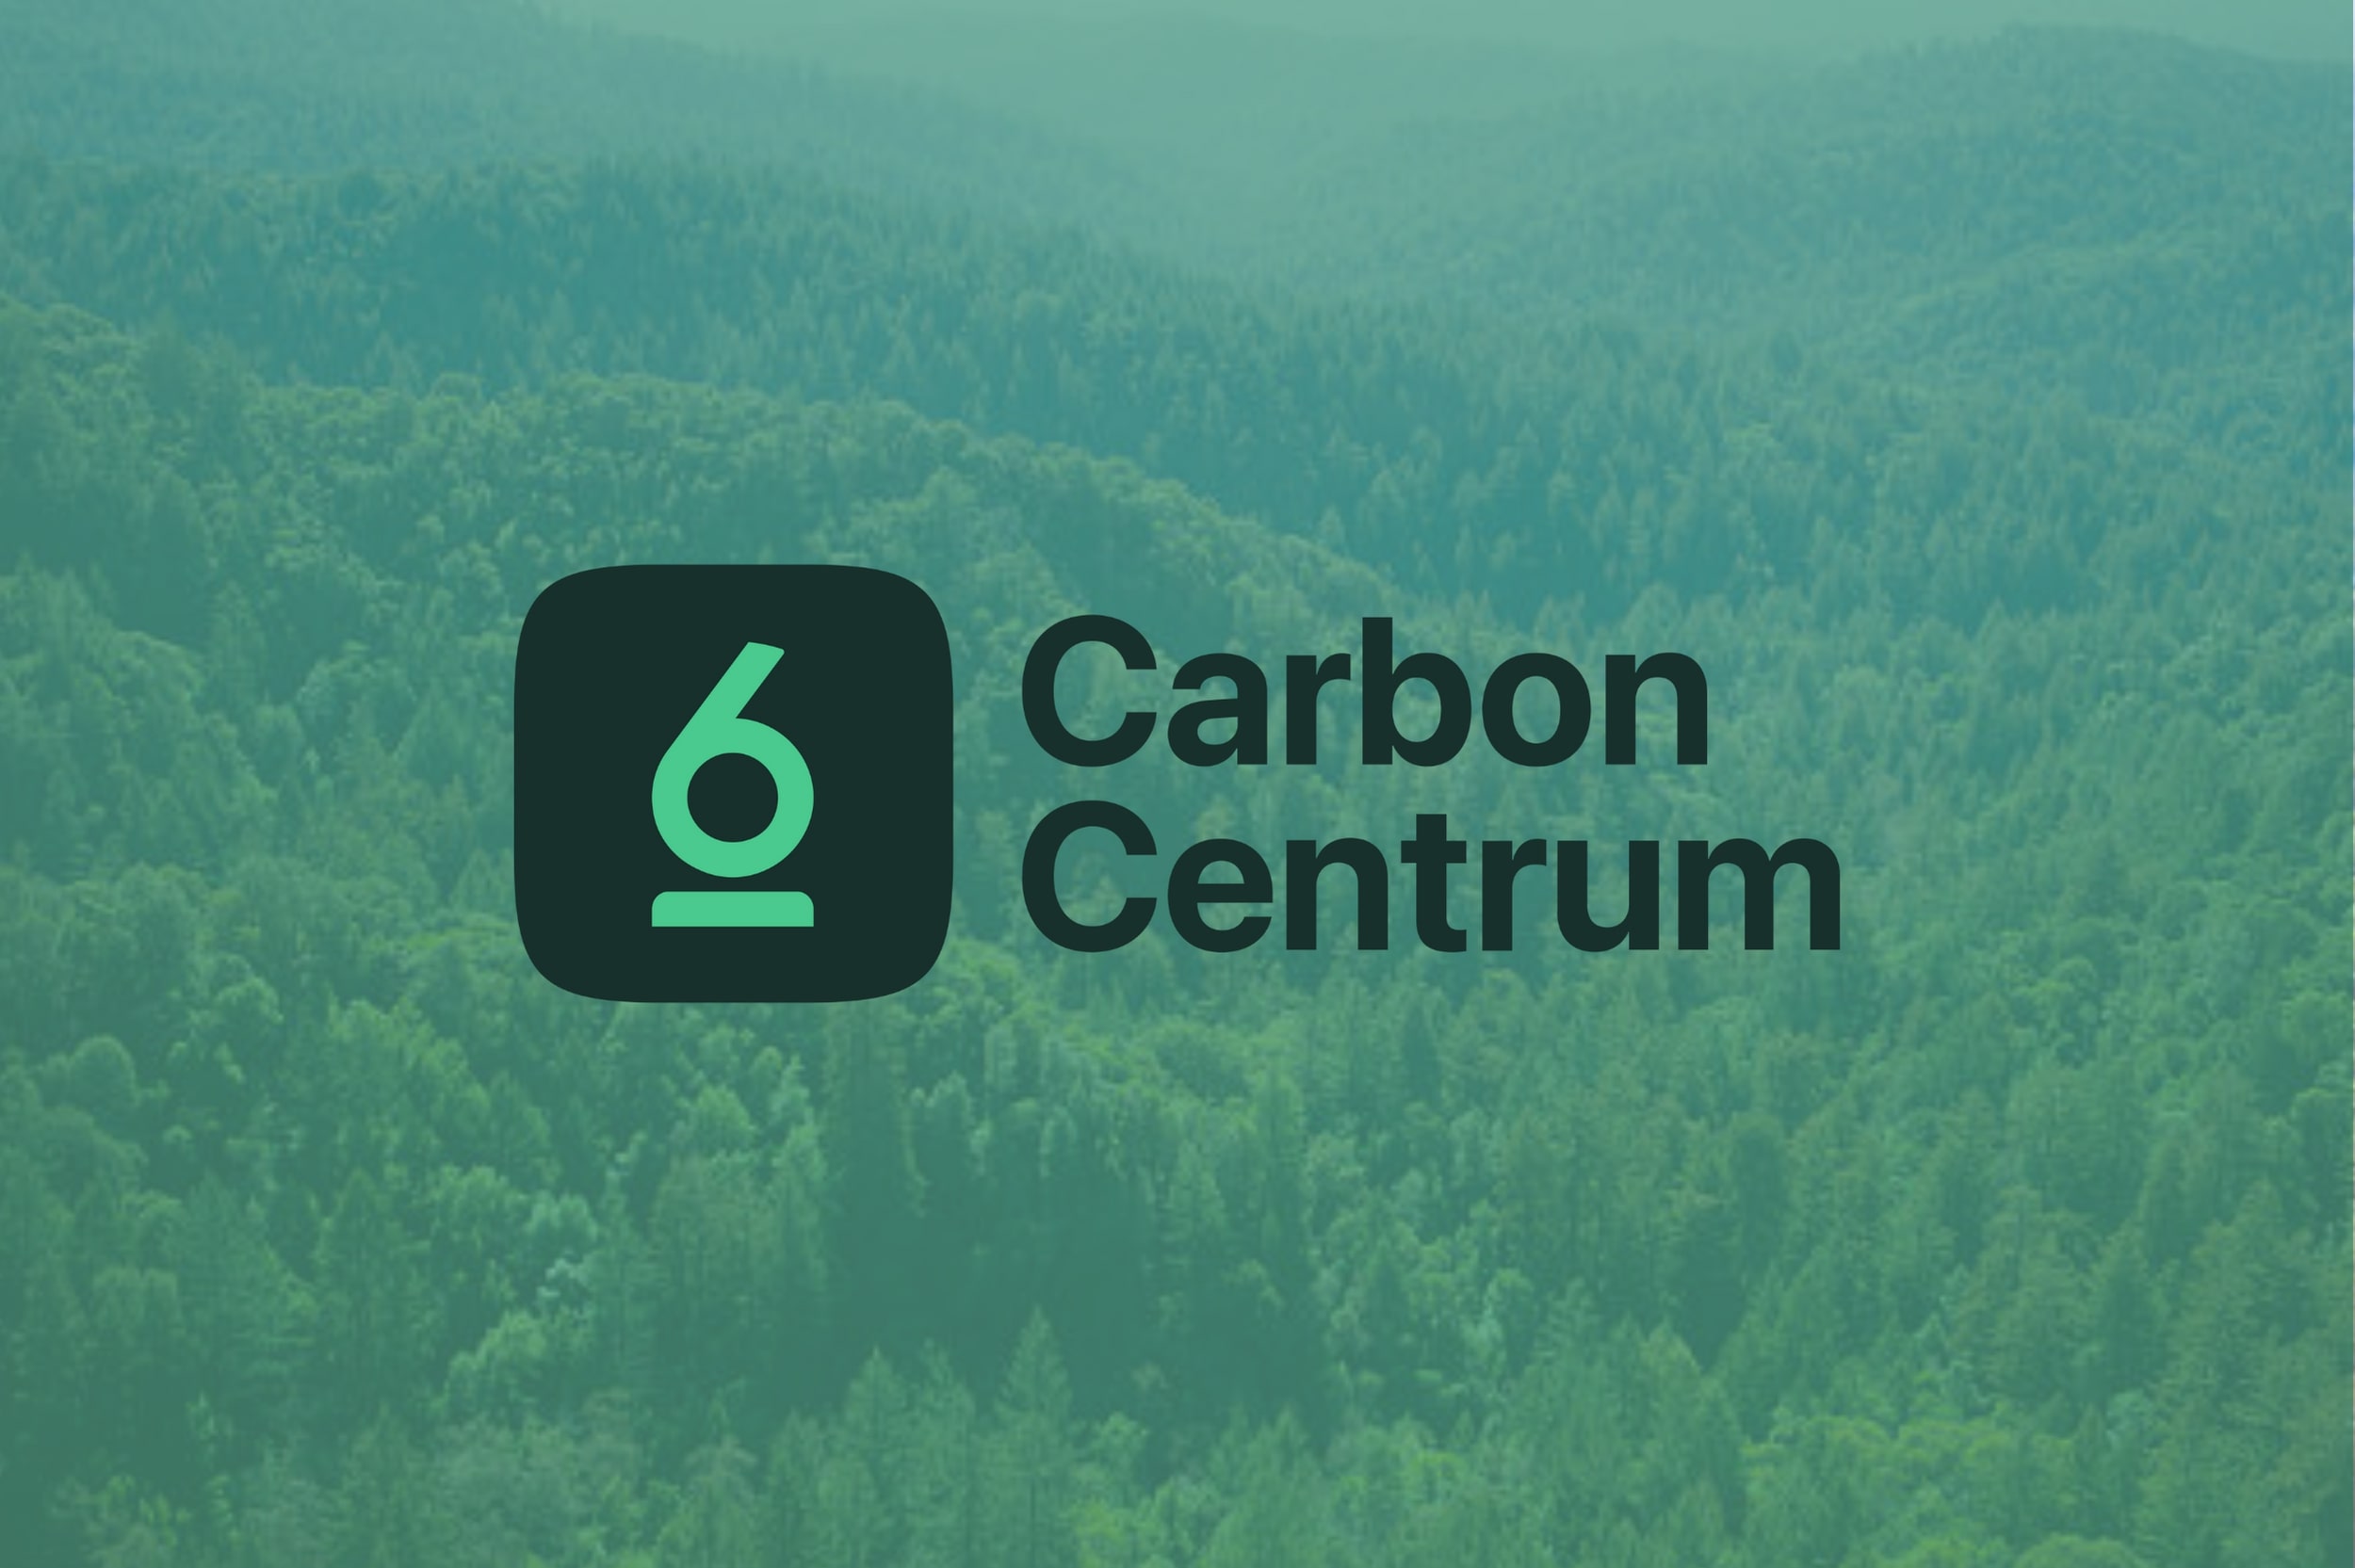 Carbon Centrum